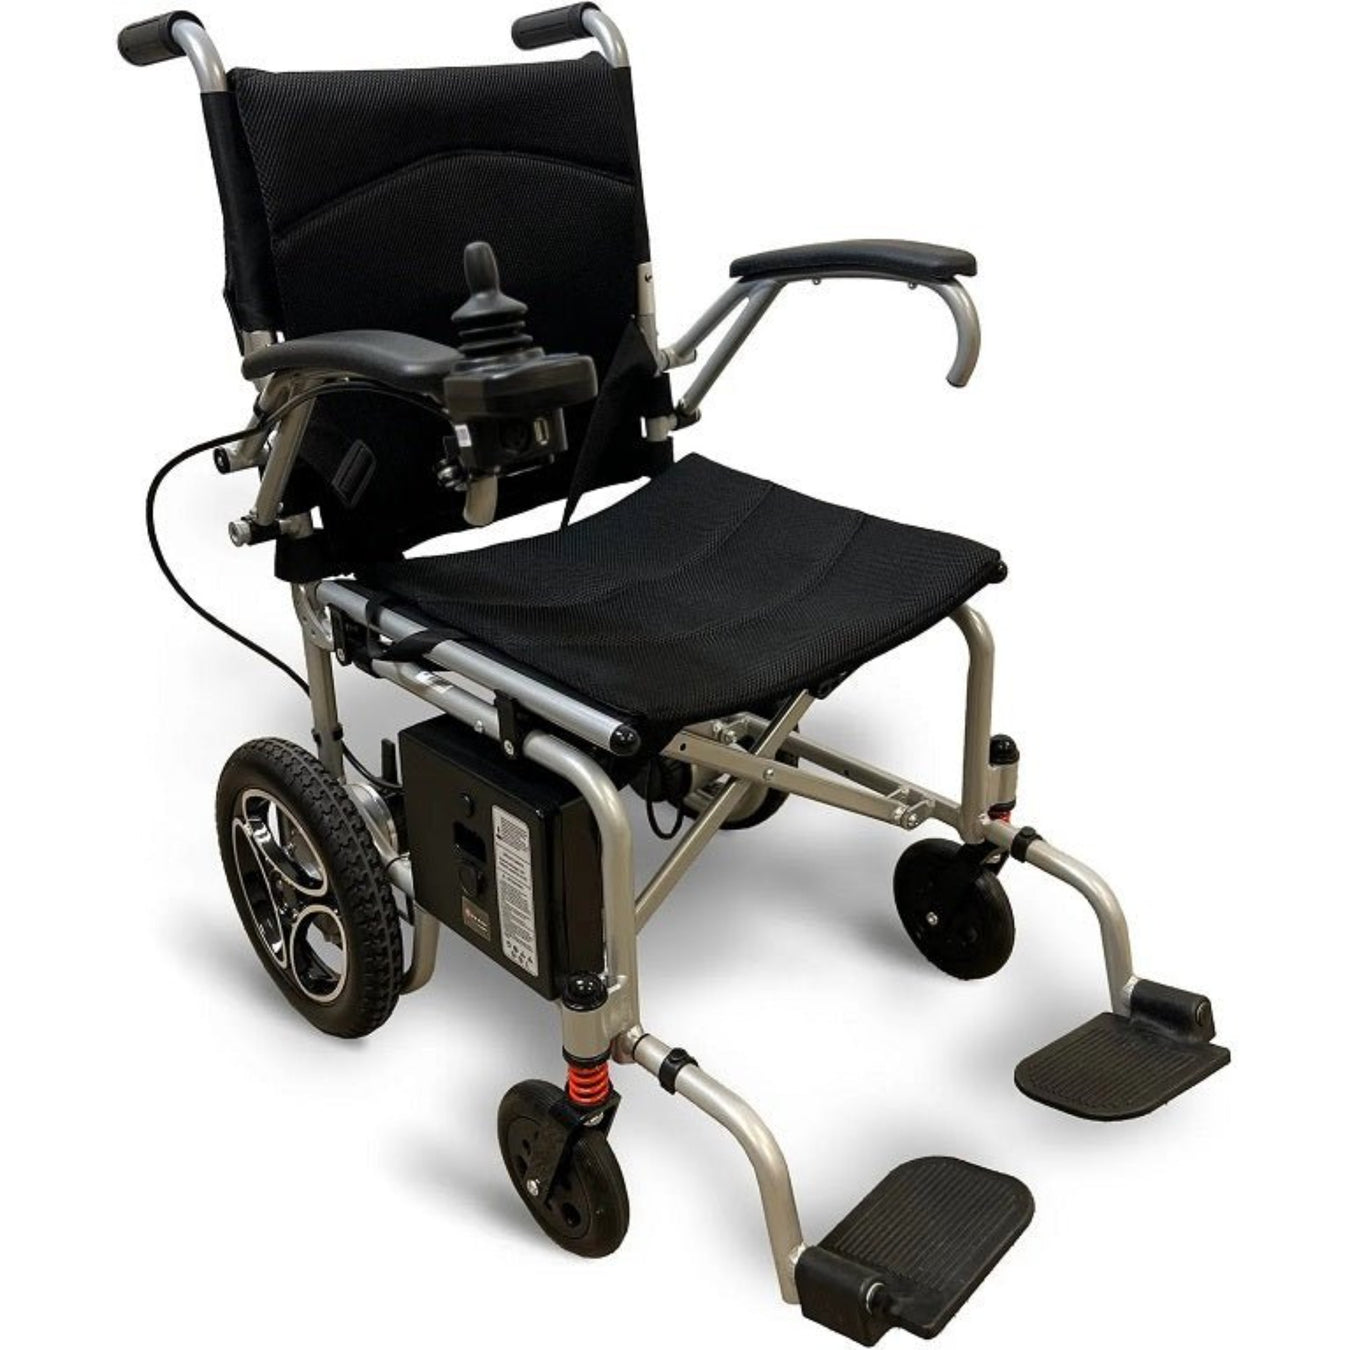 Folding Power Wheelchairs